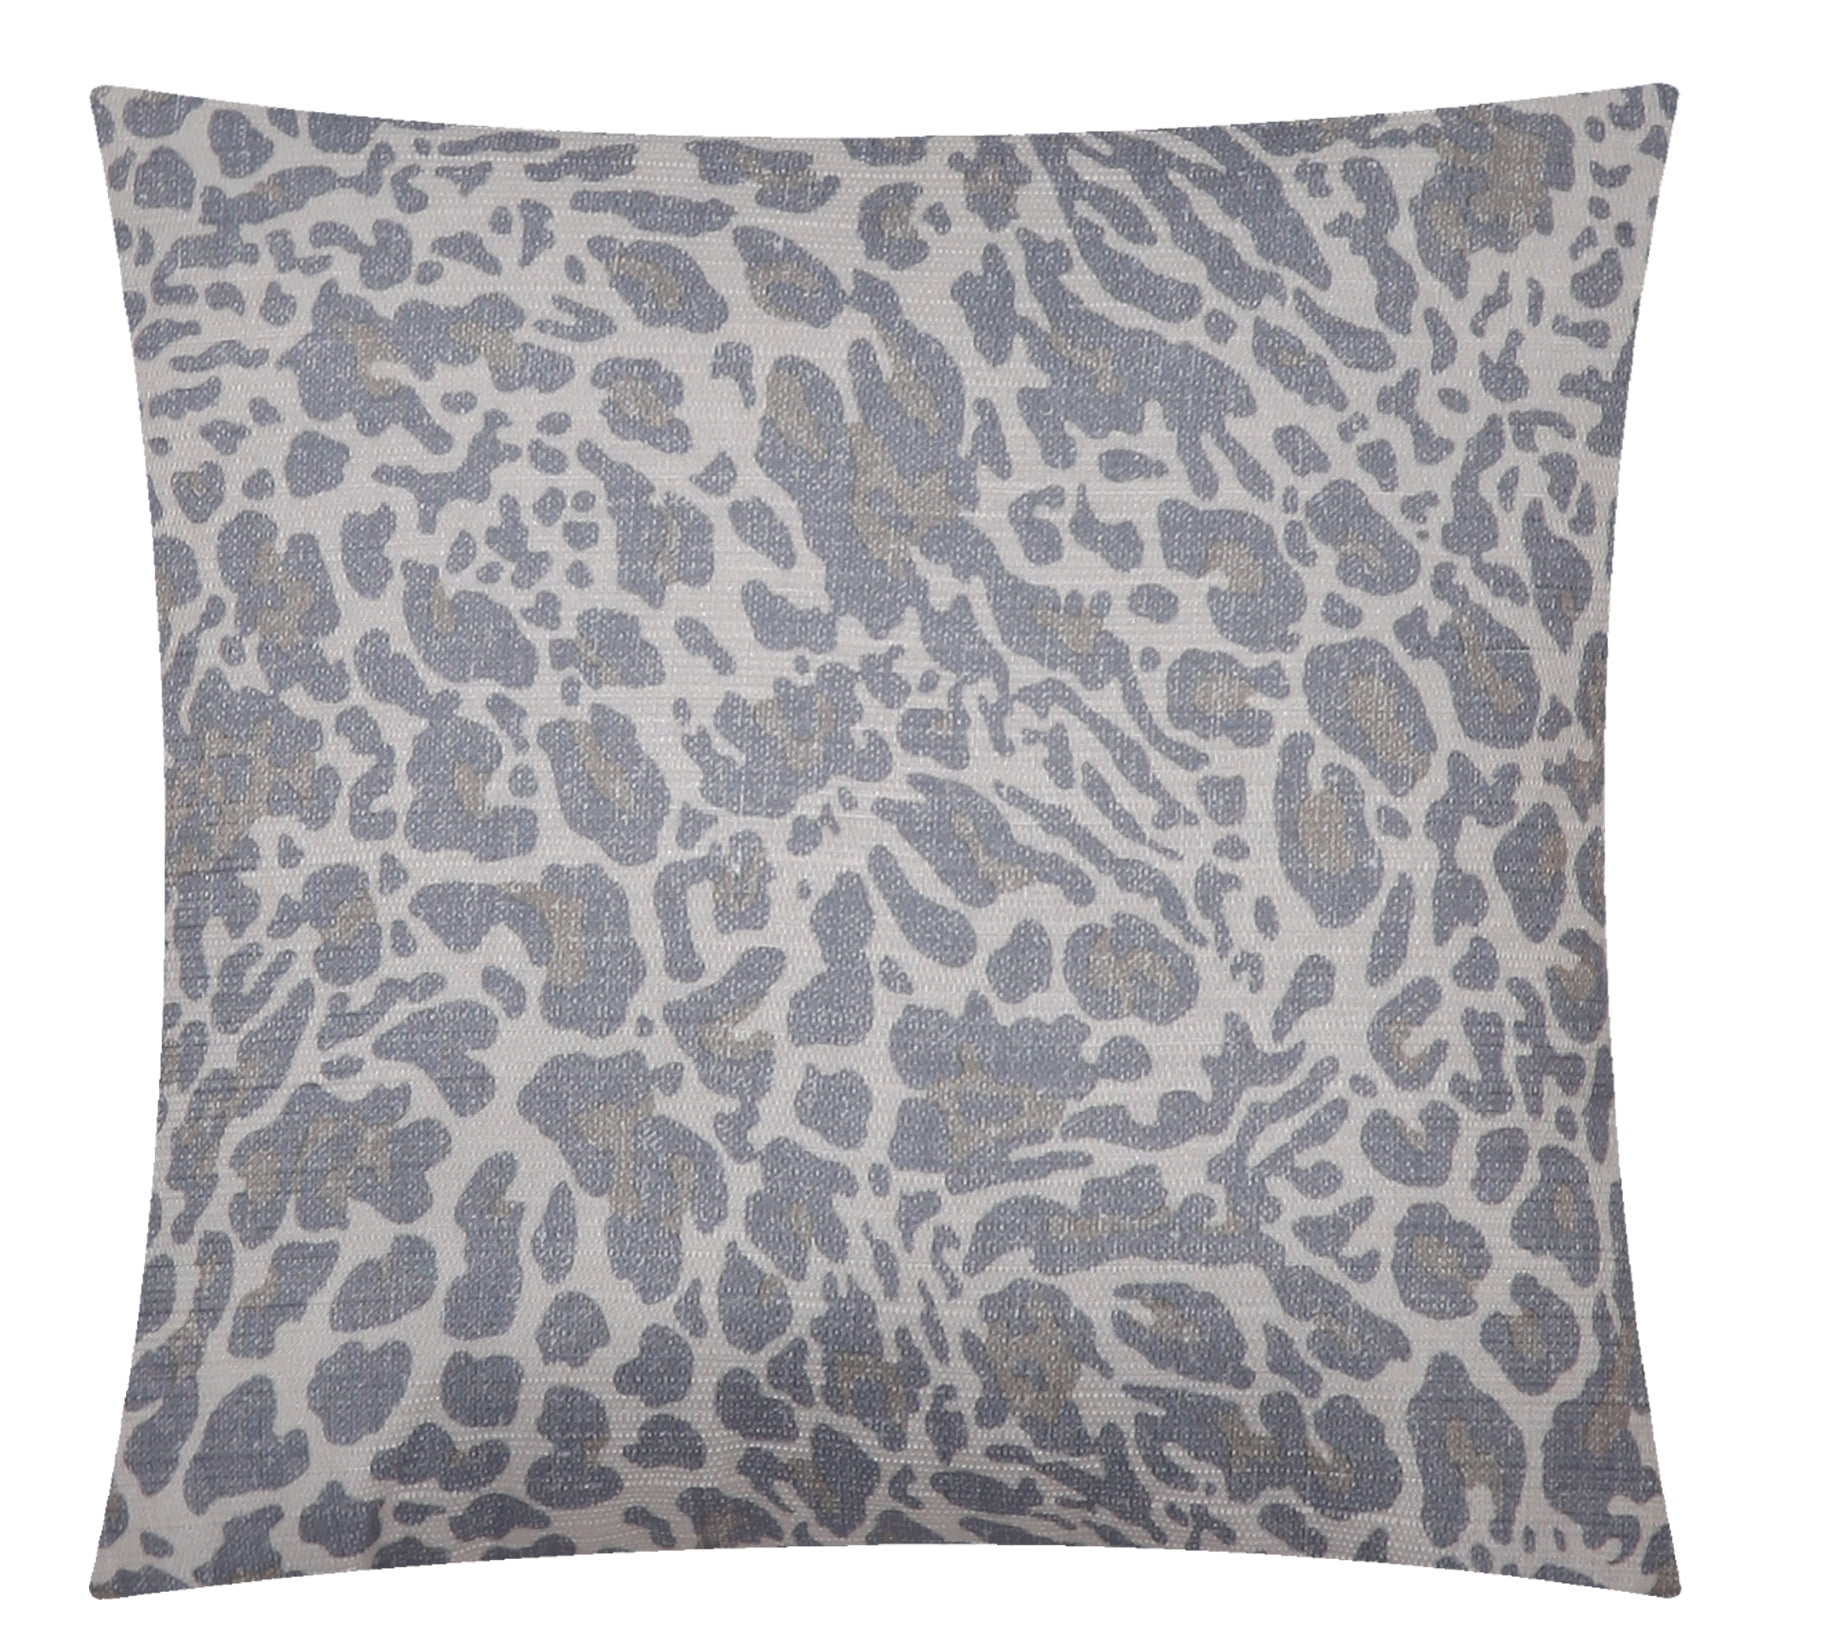 Mainstays Animal Print Decorative Throw Pillow, 16